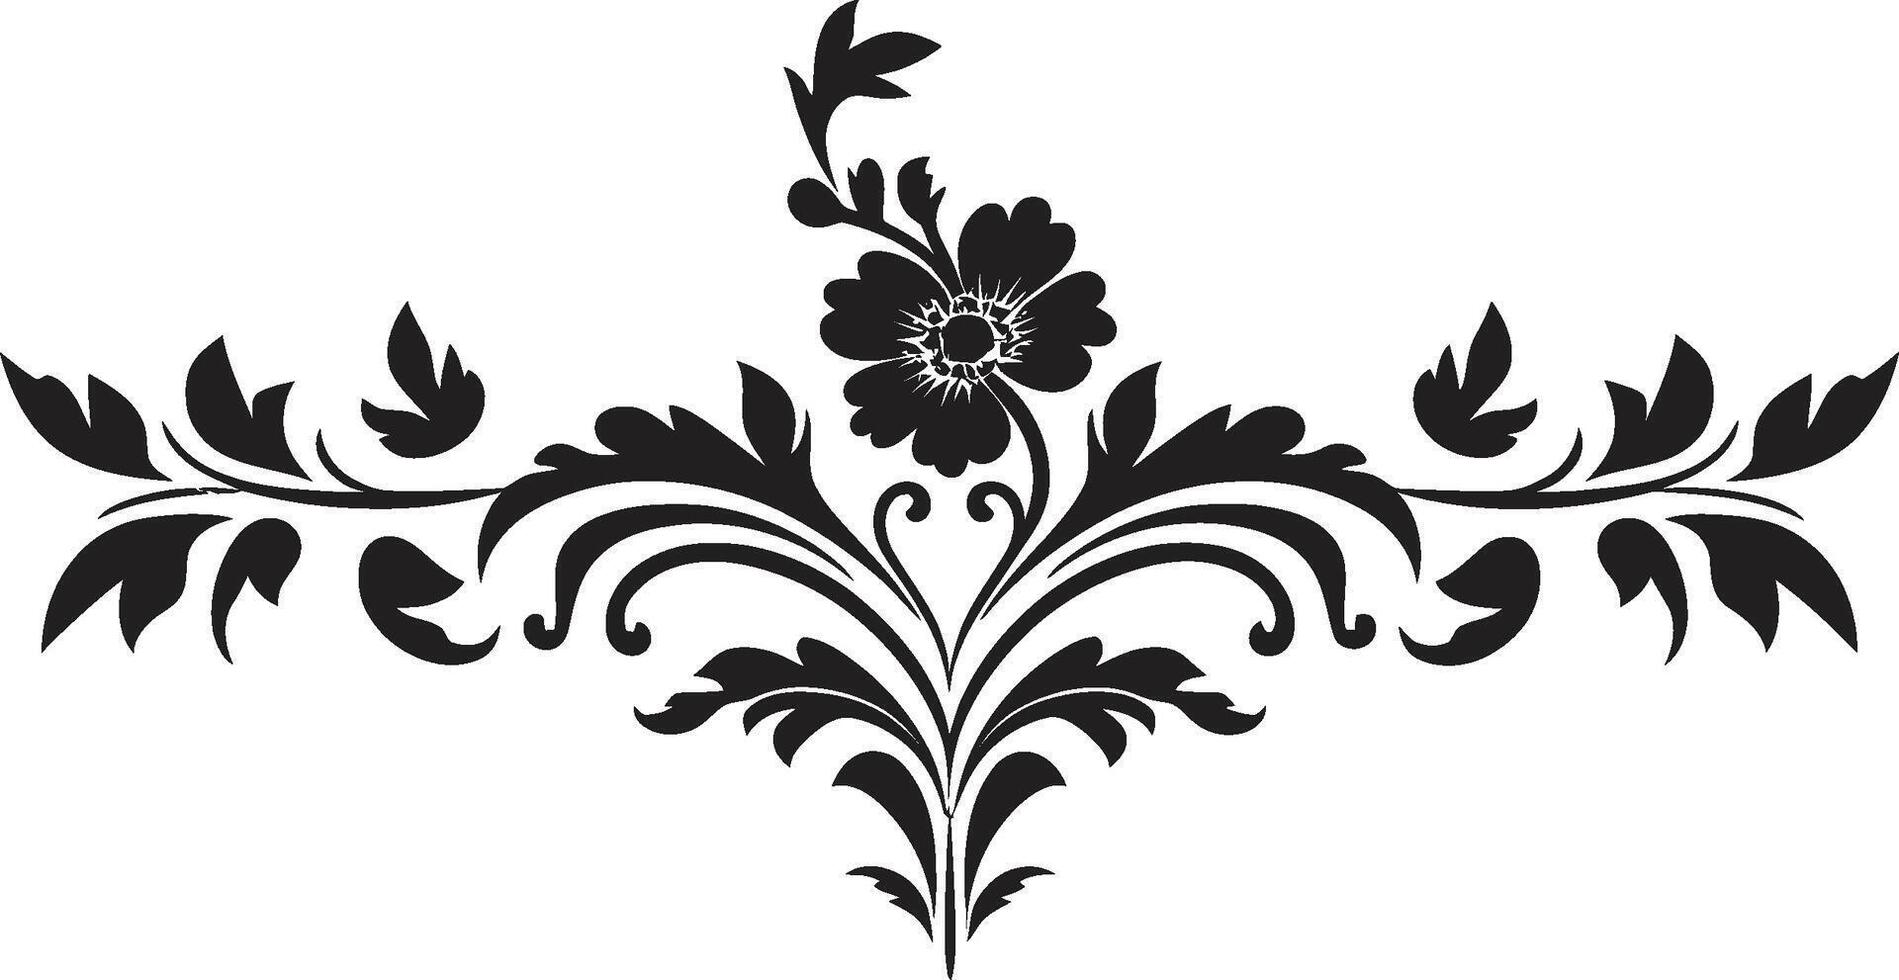 Envejecido seducir pulcro emblema con negro europeo frontera diseño patrimonio matices Clásico europeo frontera logo en elegante negro vector